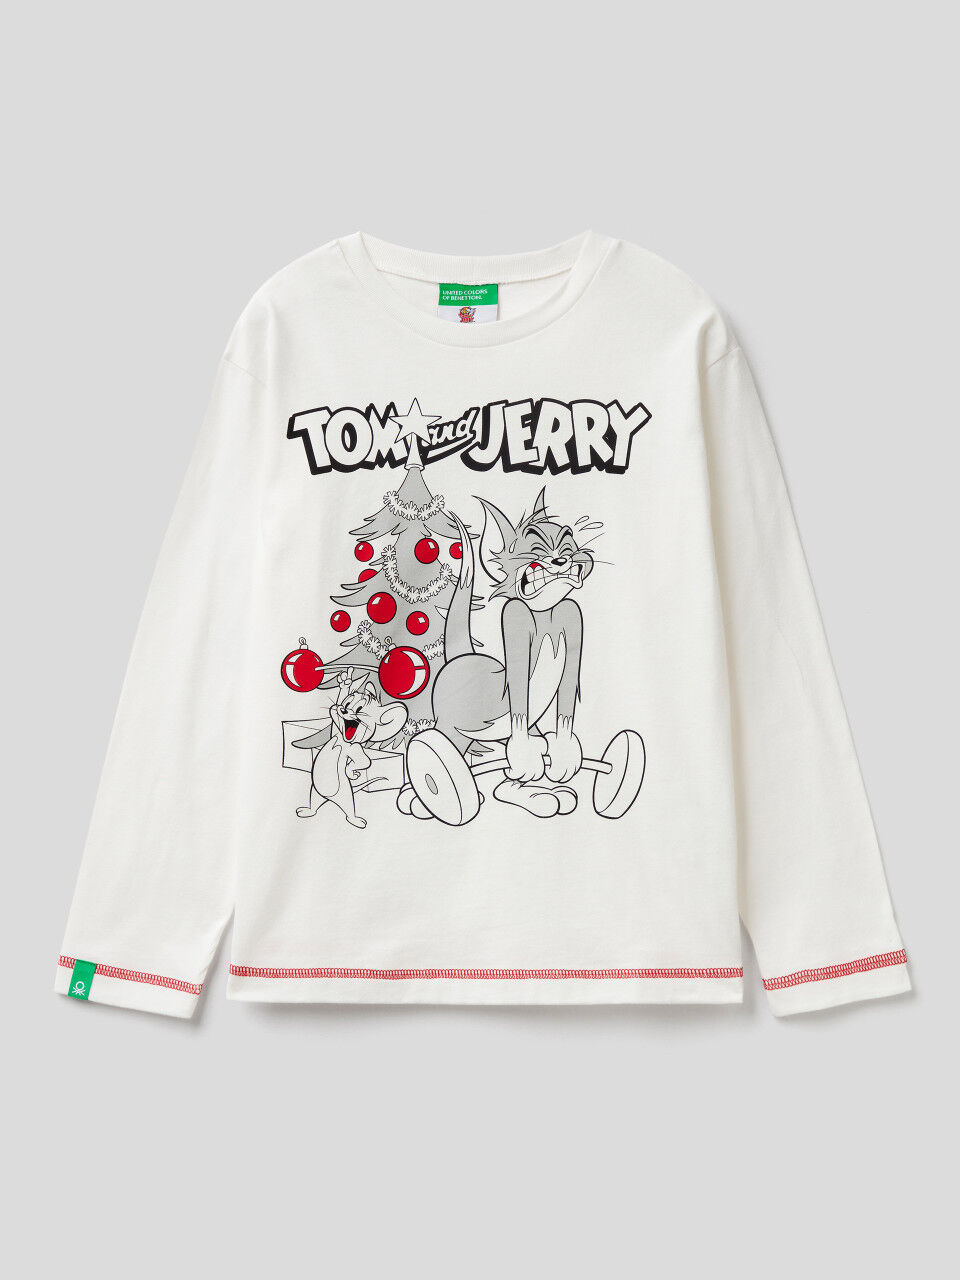 Tom & Jerry Christmas t-shirt